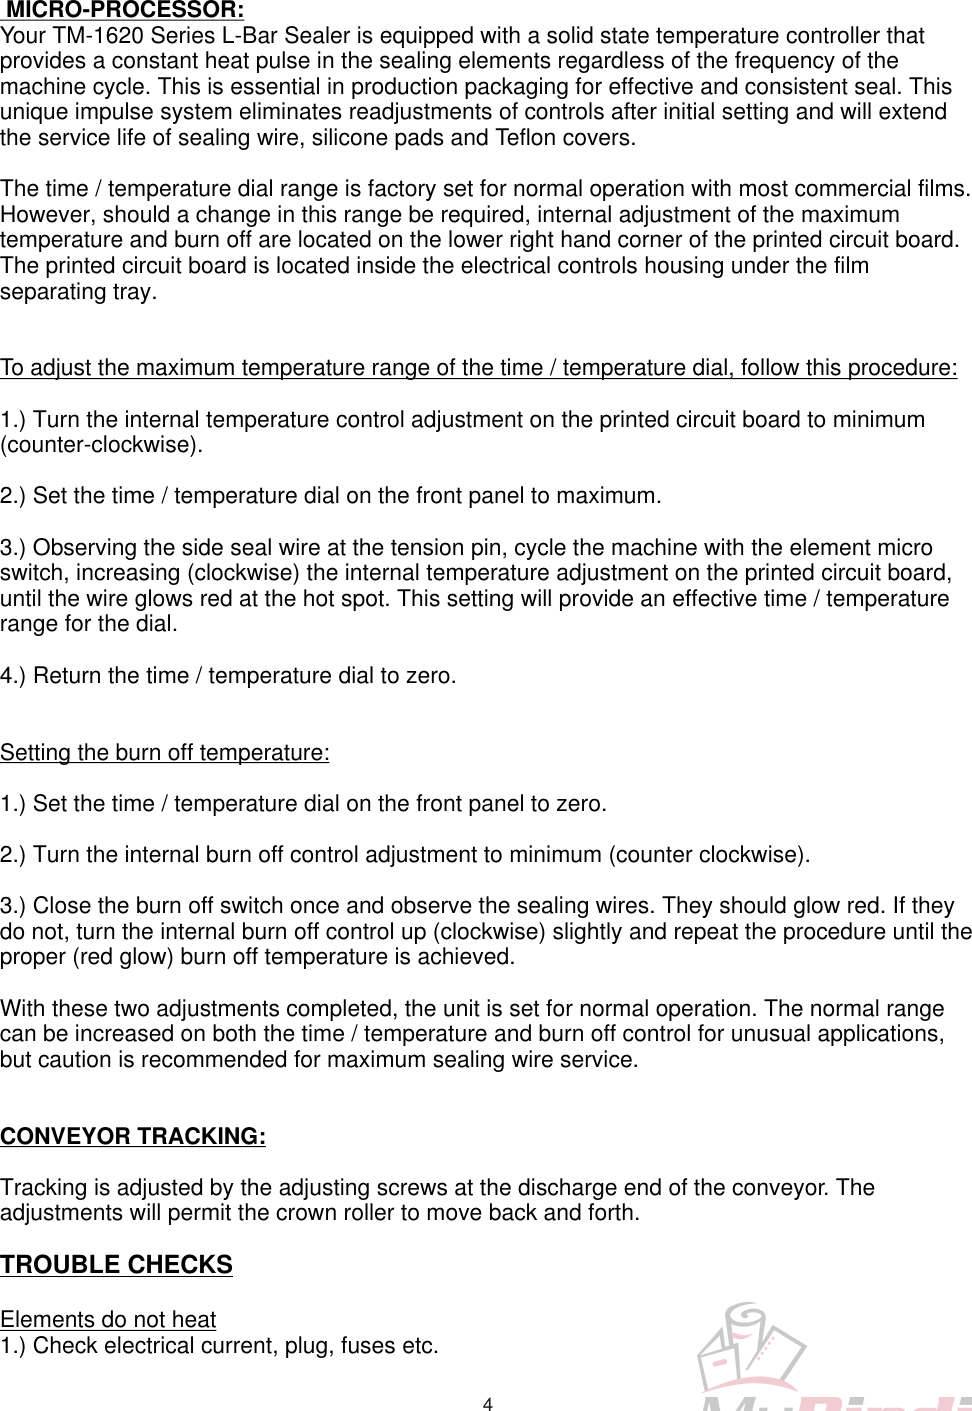 Page 6 of 10 - MyBinding Traco-Tm1620-Manual User Manual